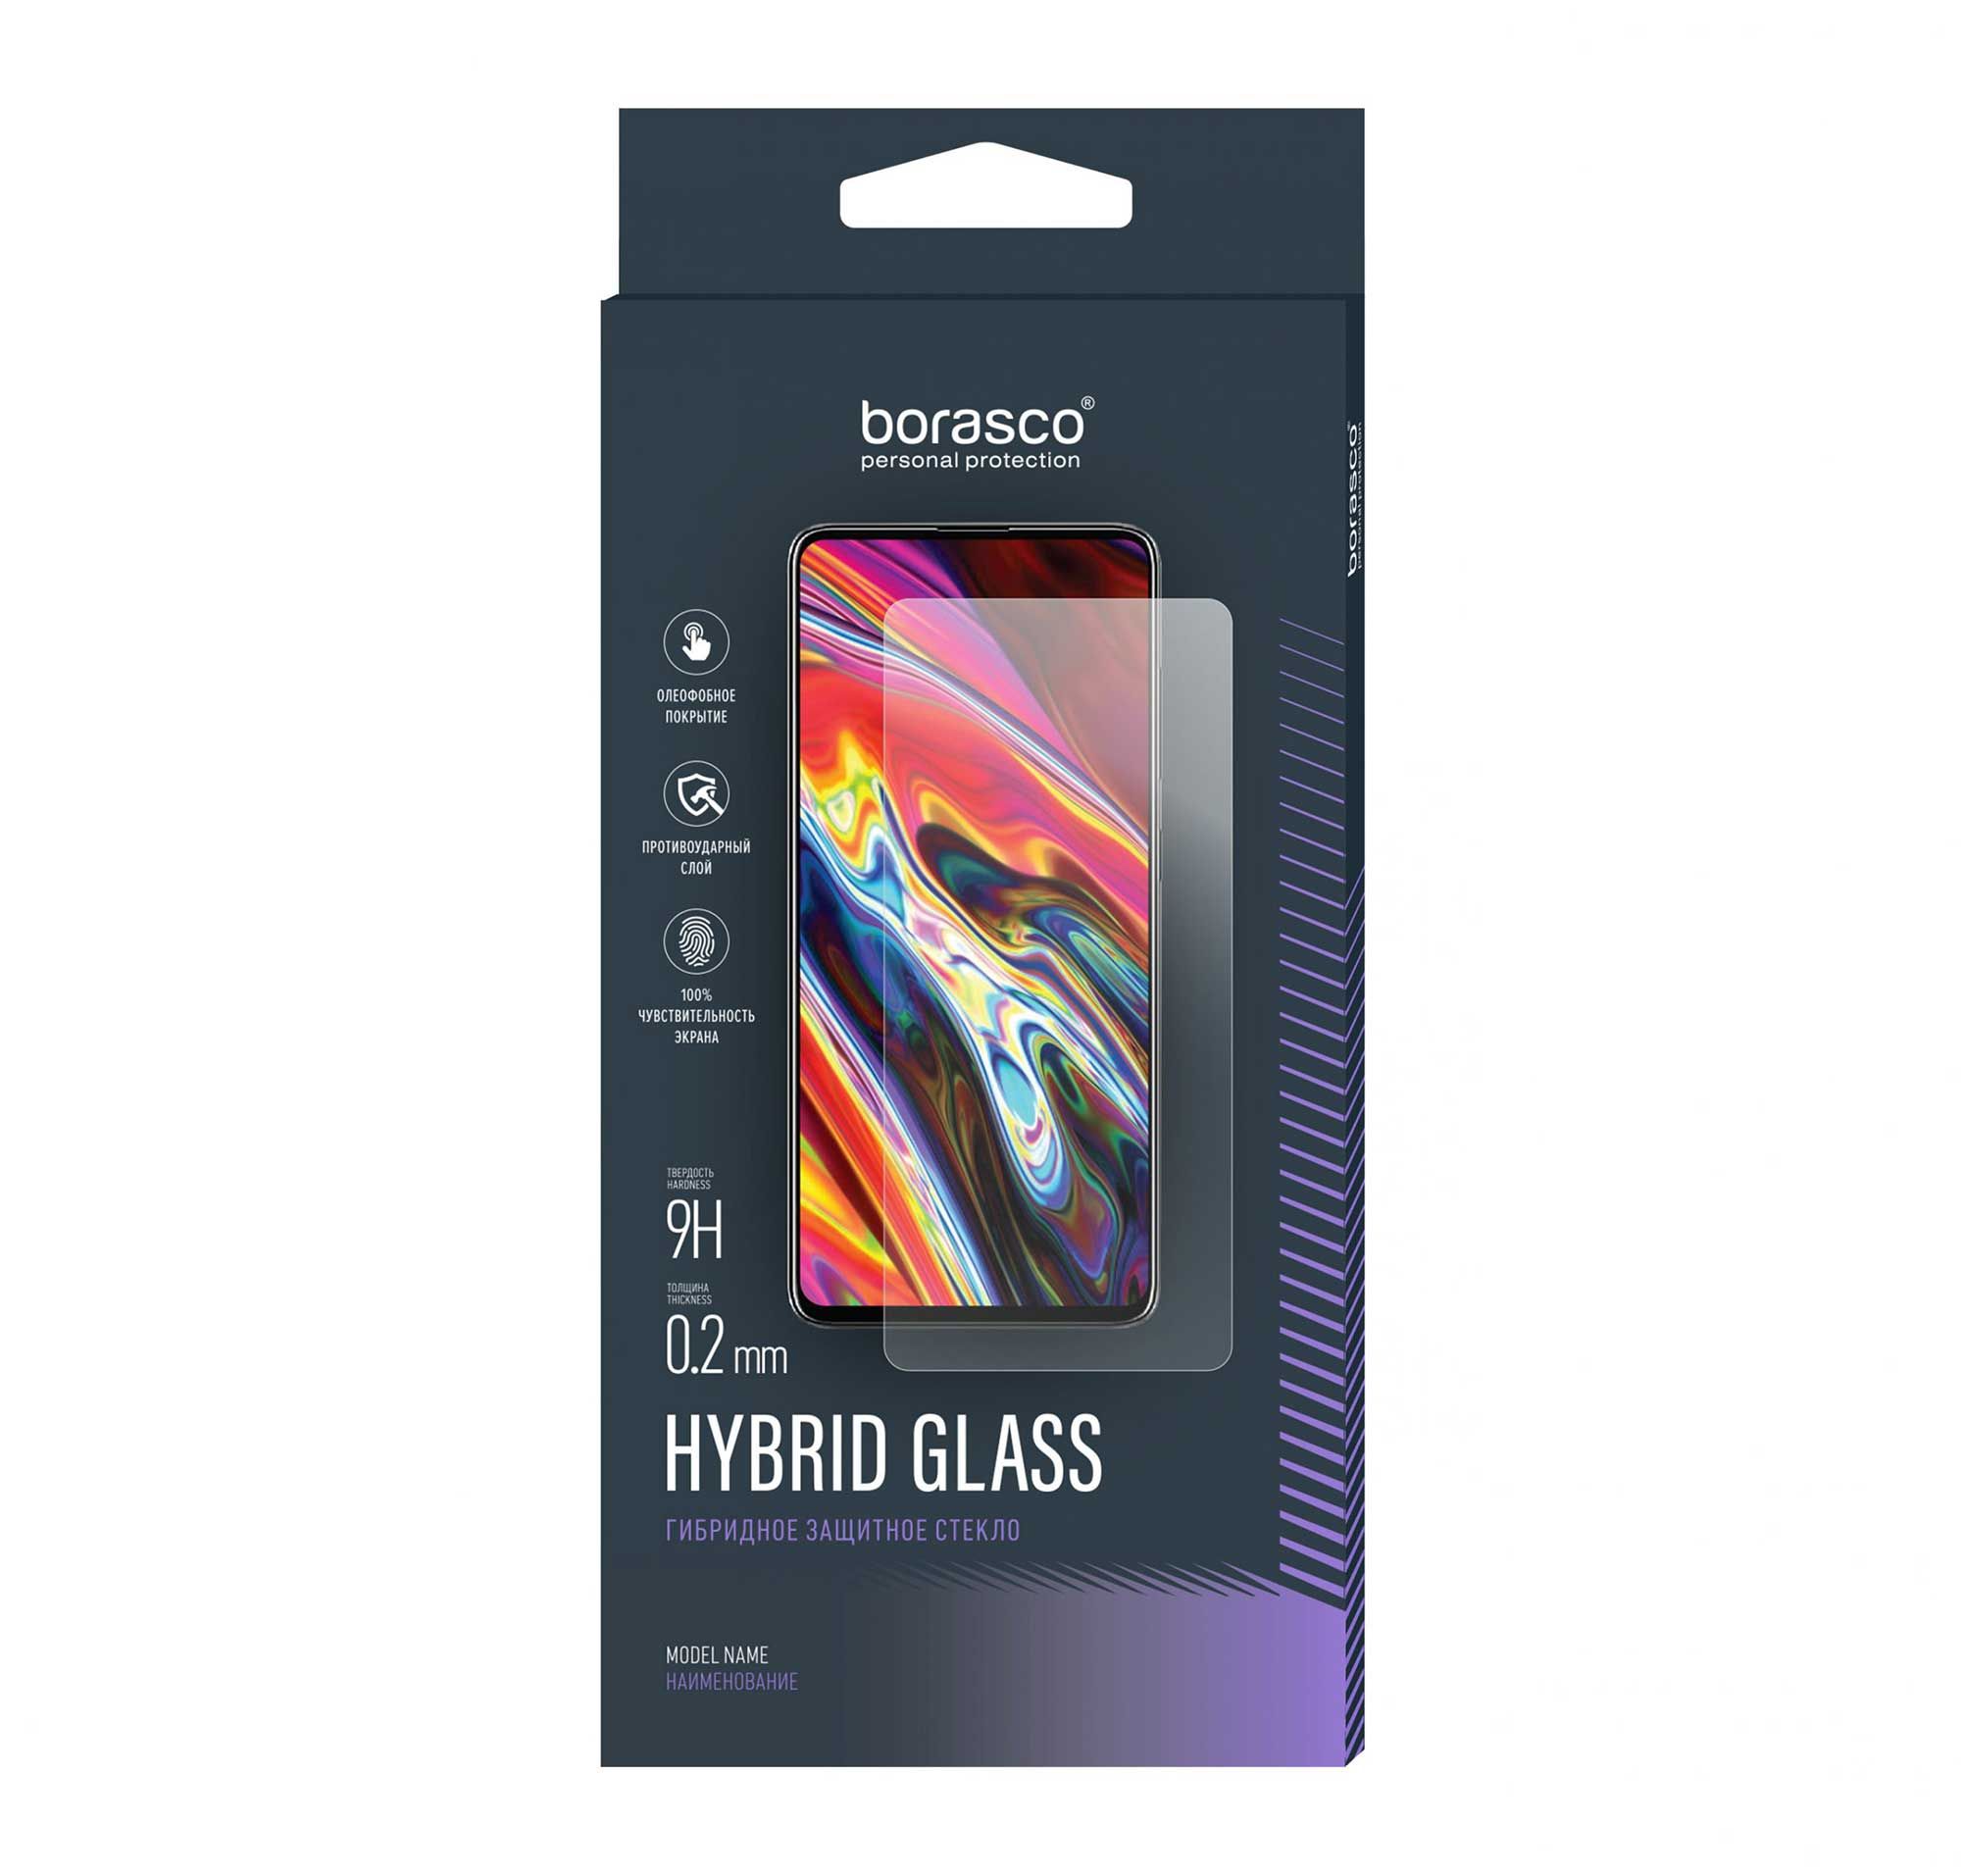 Защитное стекло Hybrid Glass для Sony Xperia 1 III защитное стекло для sony xperia z3 d6603 2 5d